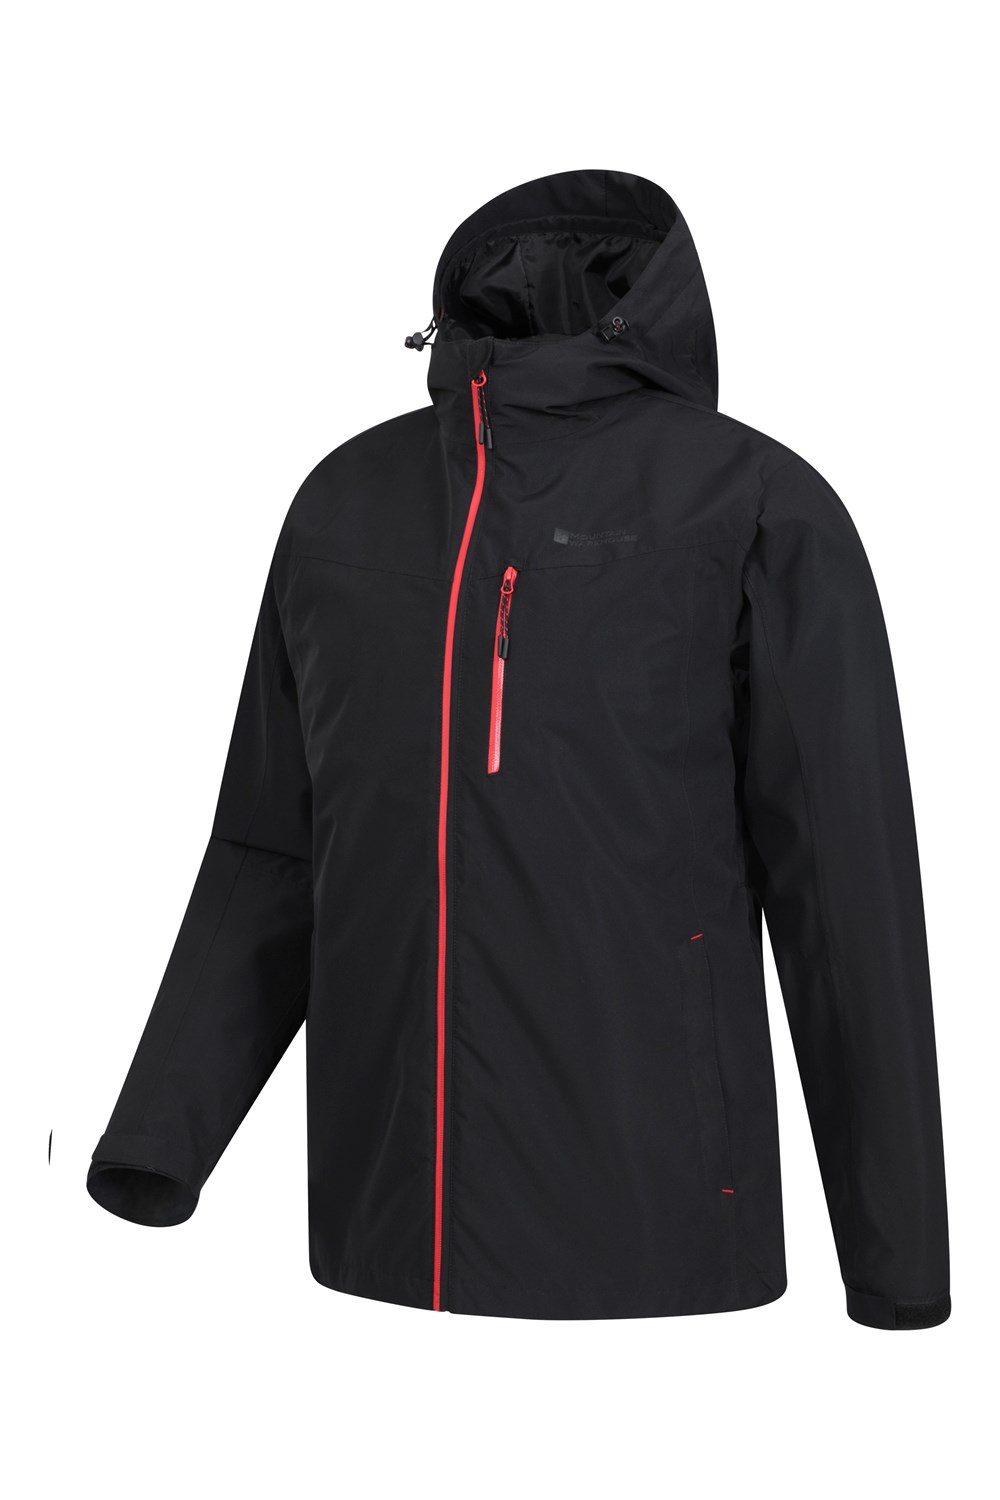 Mountain Warehouse Brisk Extreme Mens Waterproof Jacket Taped Seams ...